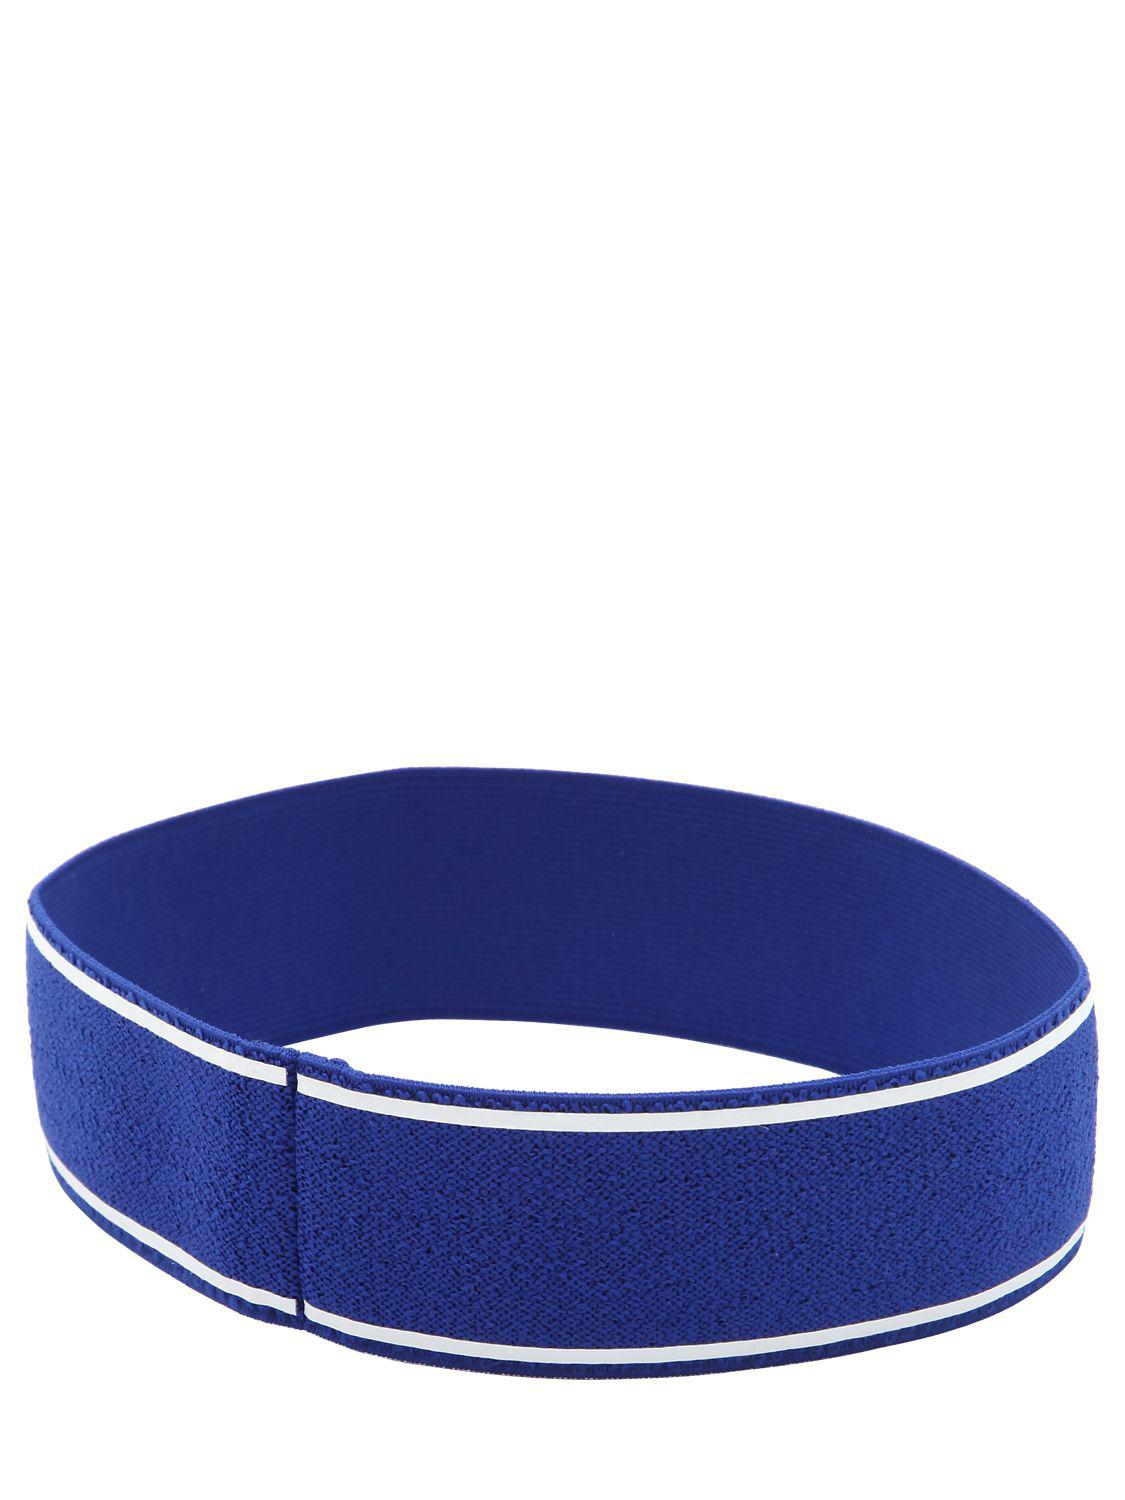 Givenchy Logo Terrycloth Sport Headband in Blue - Lyst